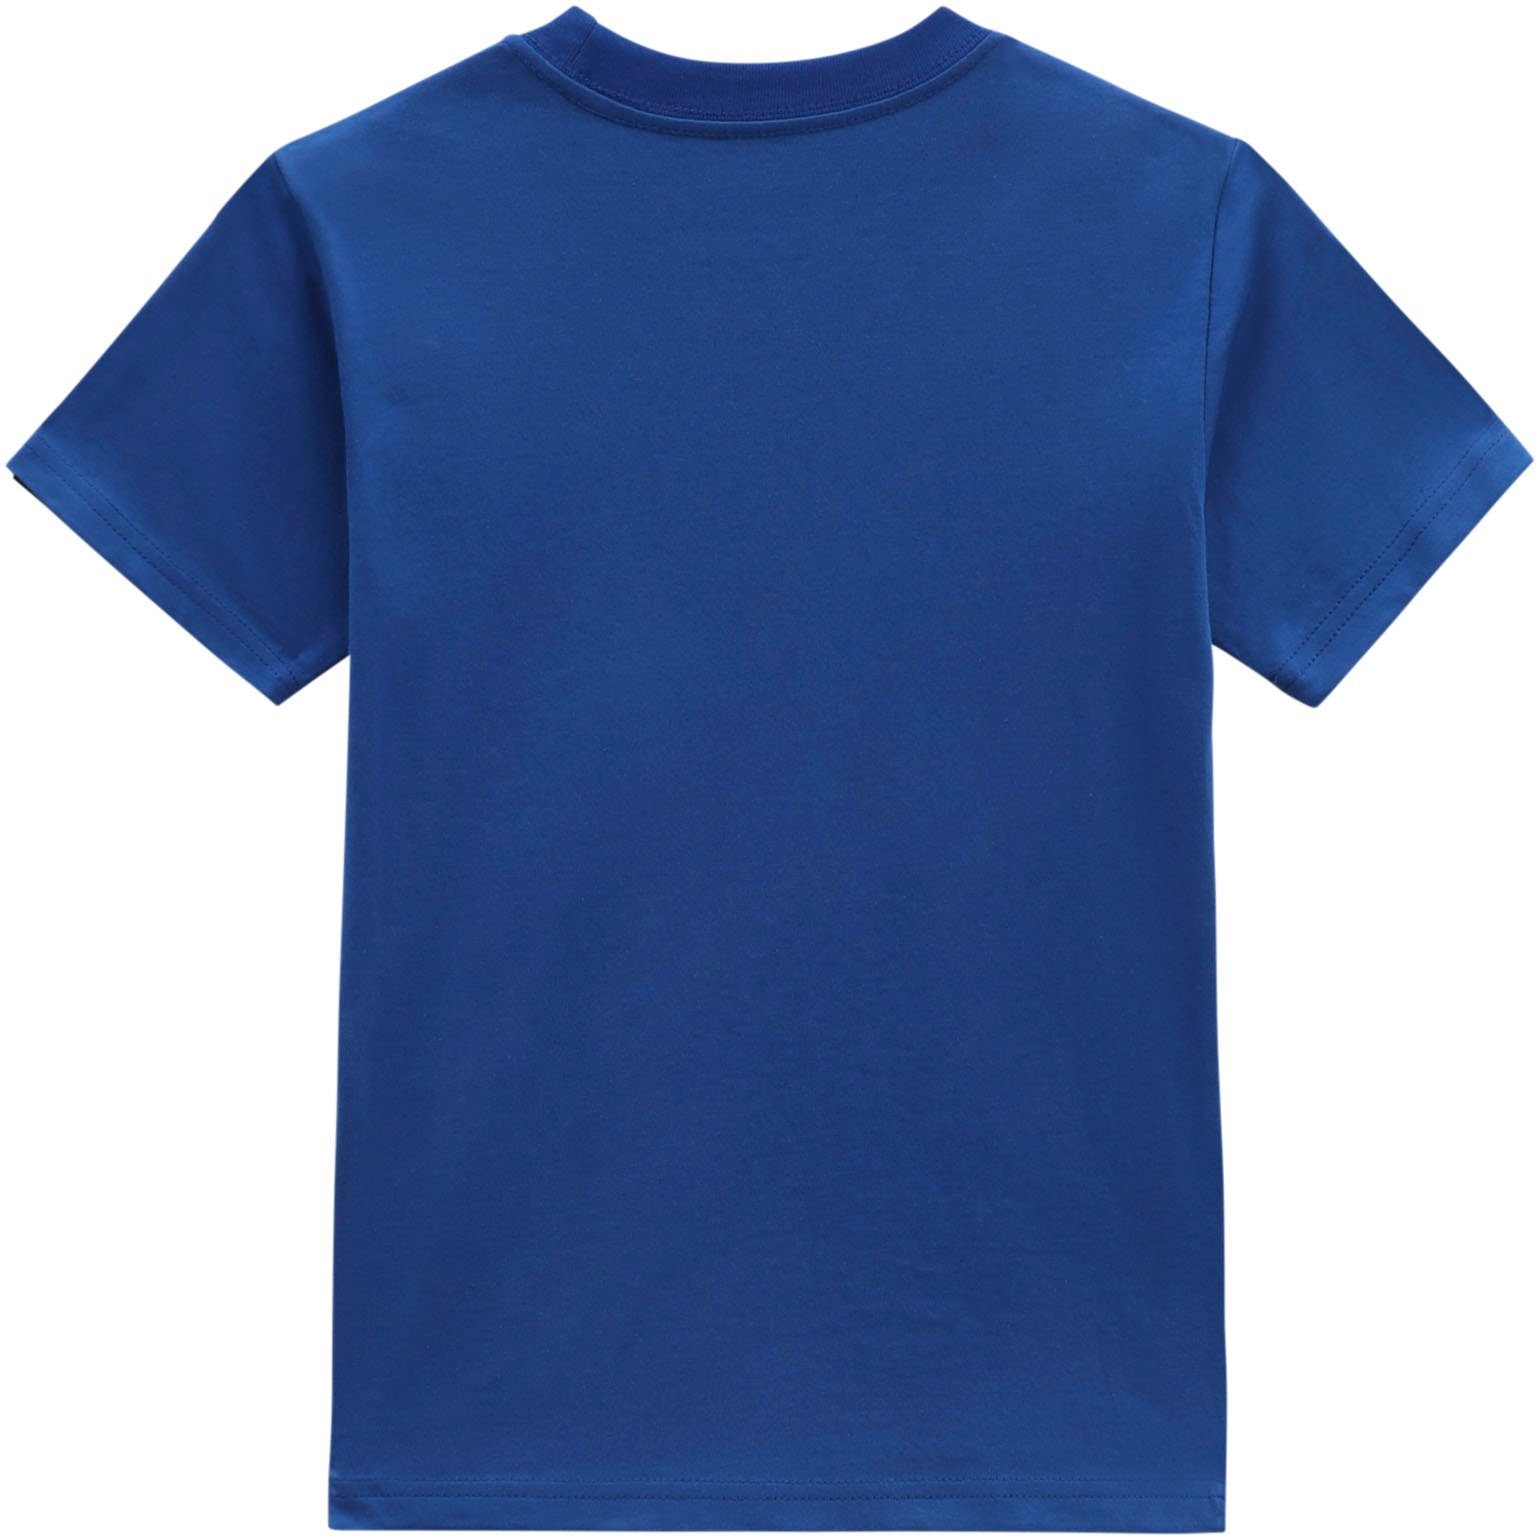 Vans T-Shirt BY VANS white CLASSIC blue/ KIDS